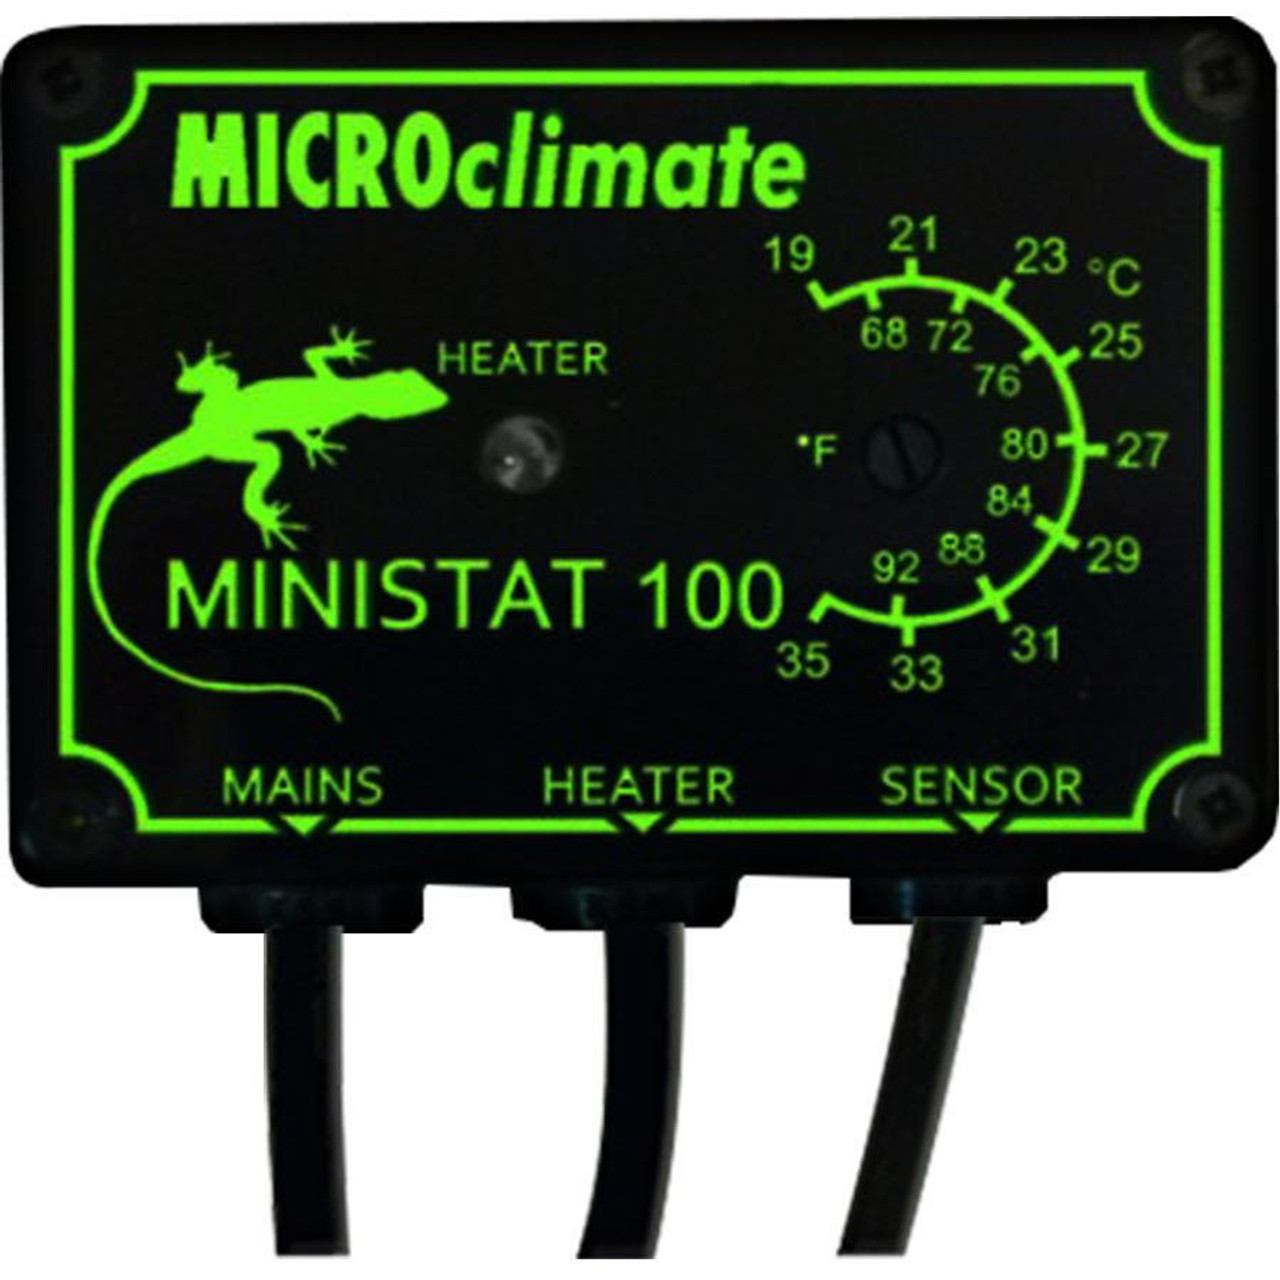 Microclimate Ministat 100 watt On/Off Thermostat